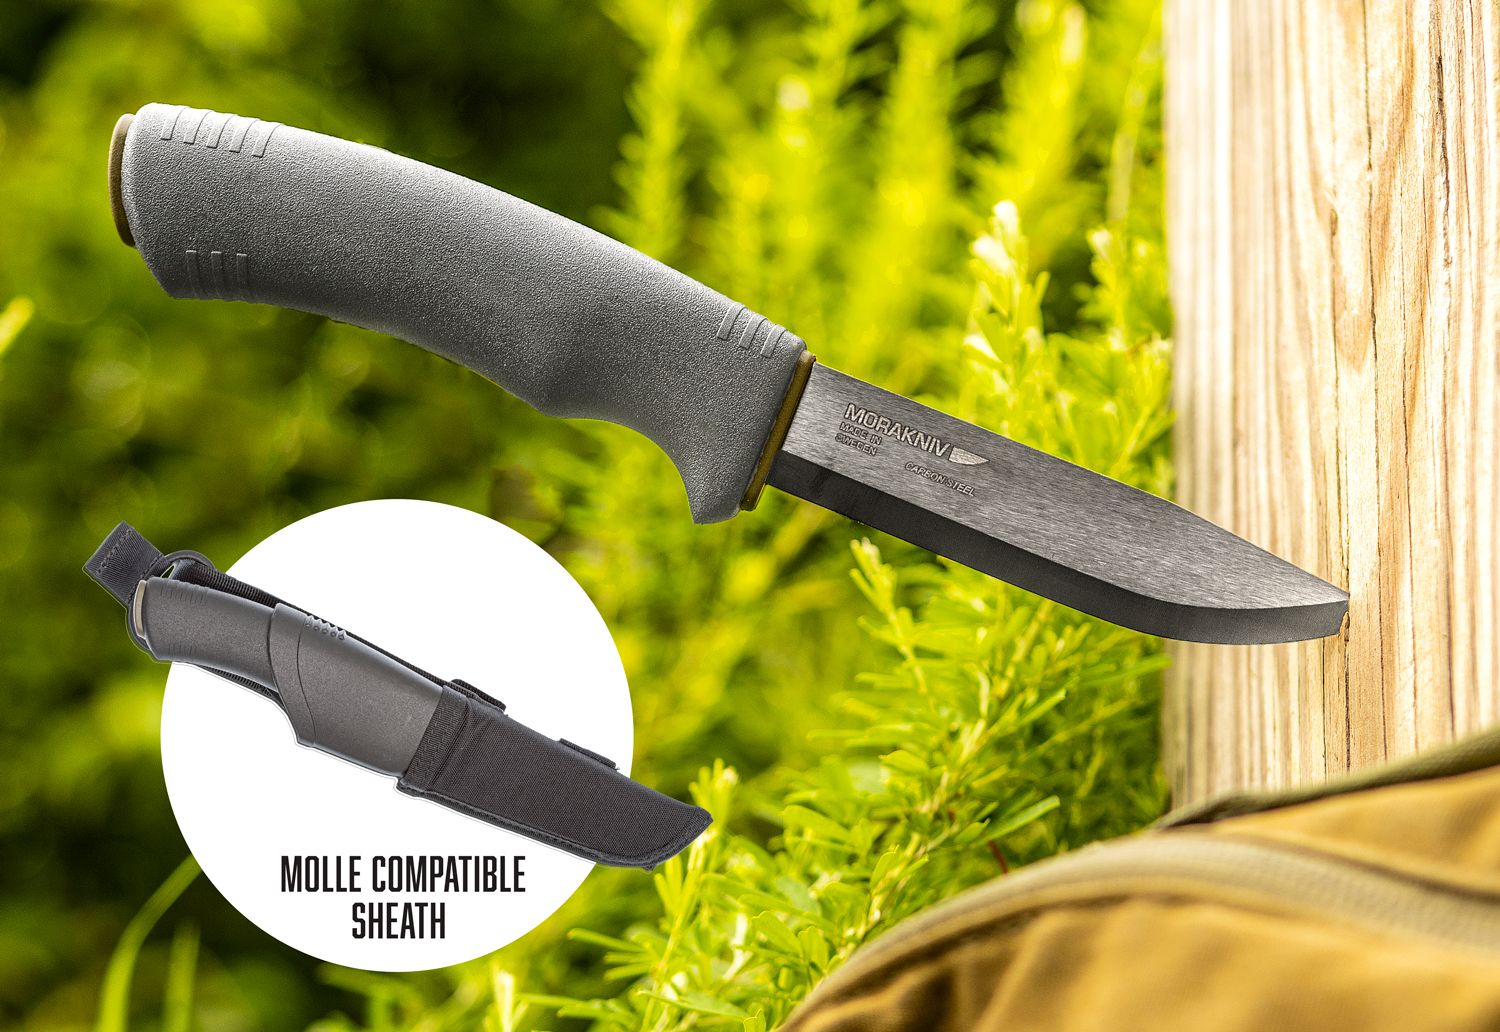 Morakniv Garberg Utility Knife Fixed 4.3 Black Carbon Steel Blade